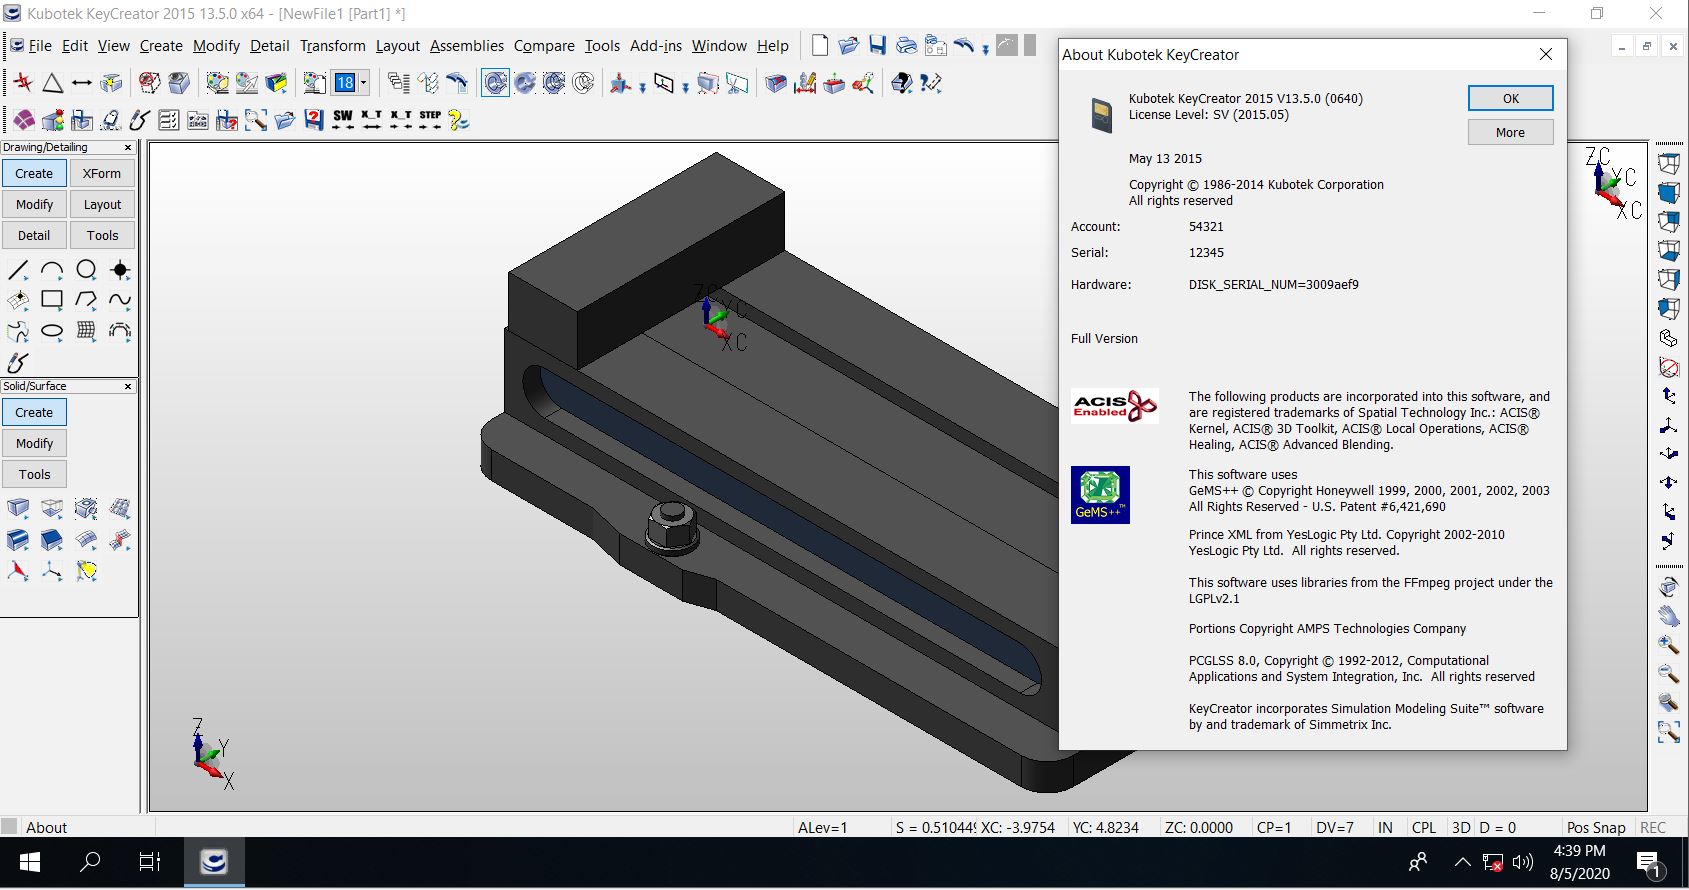 Working with Kubotek KeyCreator Direct CAD 13.5.0 full